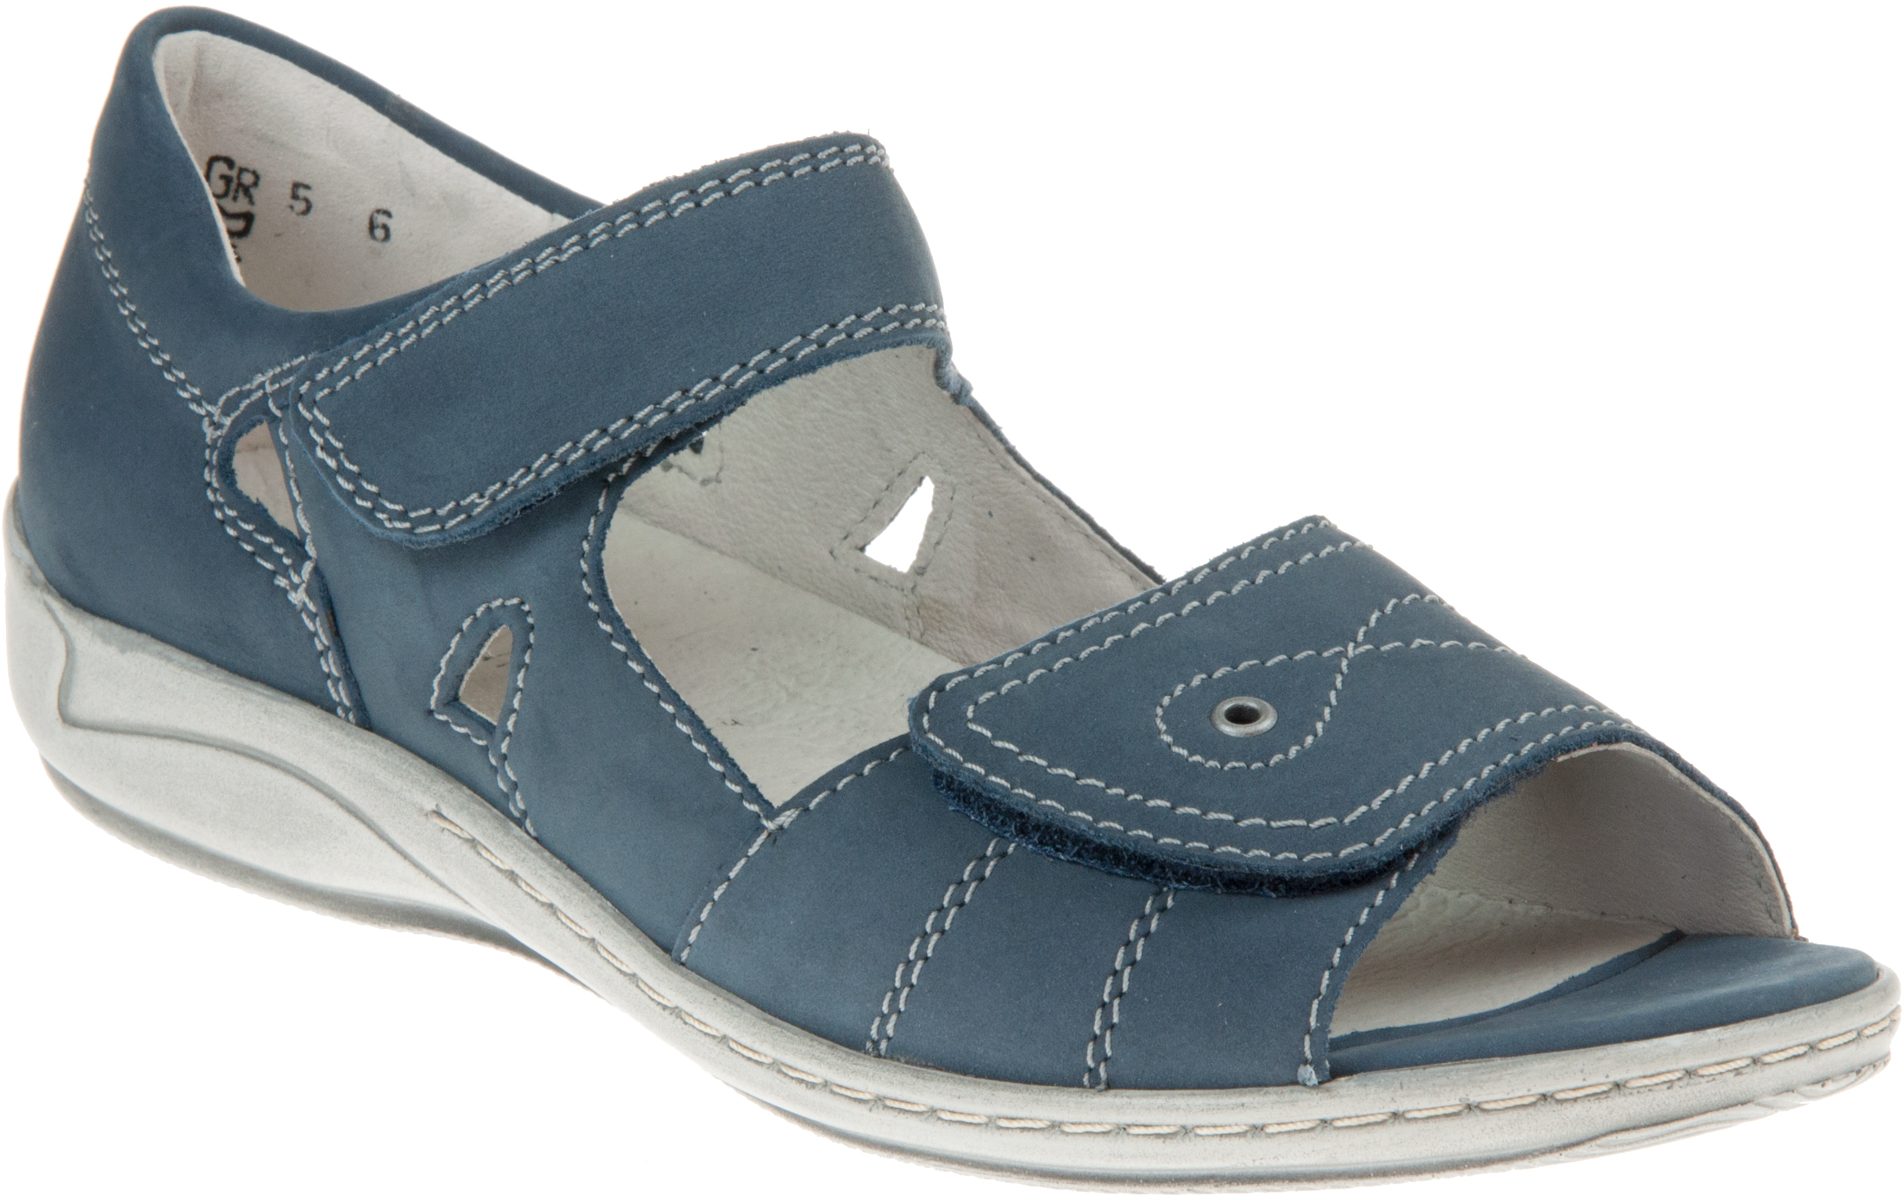 Waldlaufer Hilena Jeans 582028 191 206 - Full Sandals - Humphries Shoes